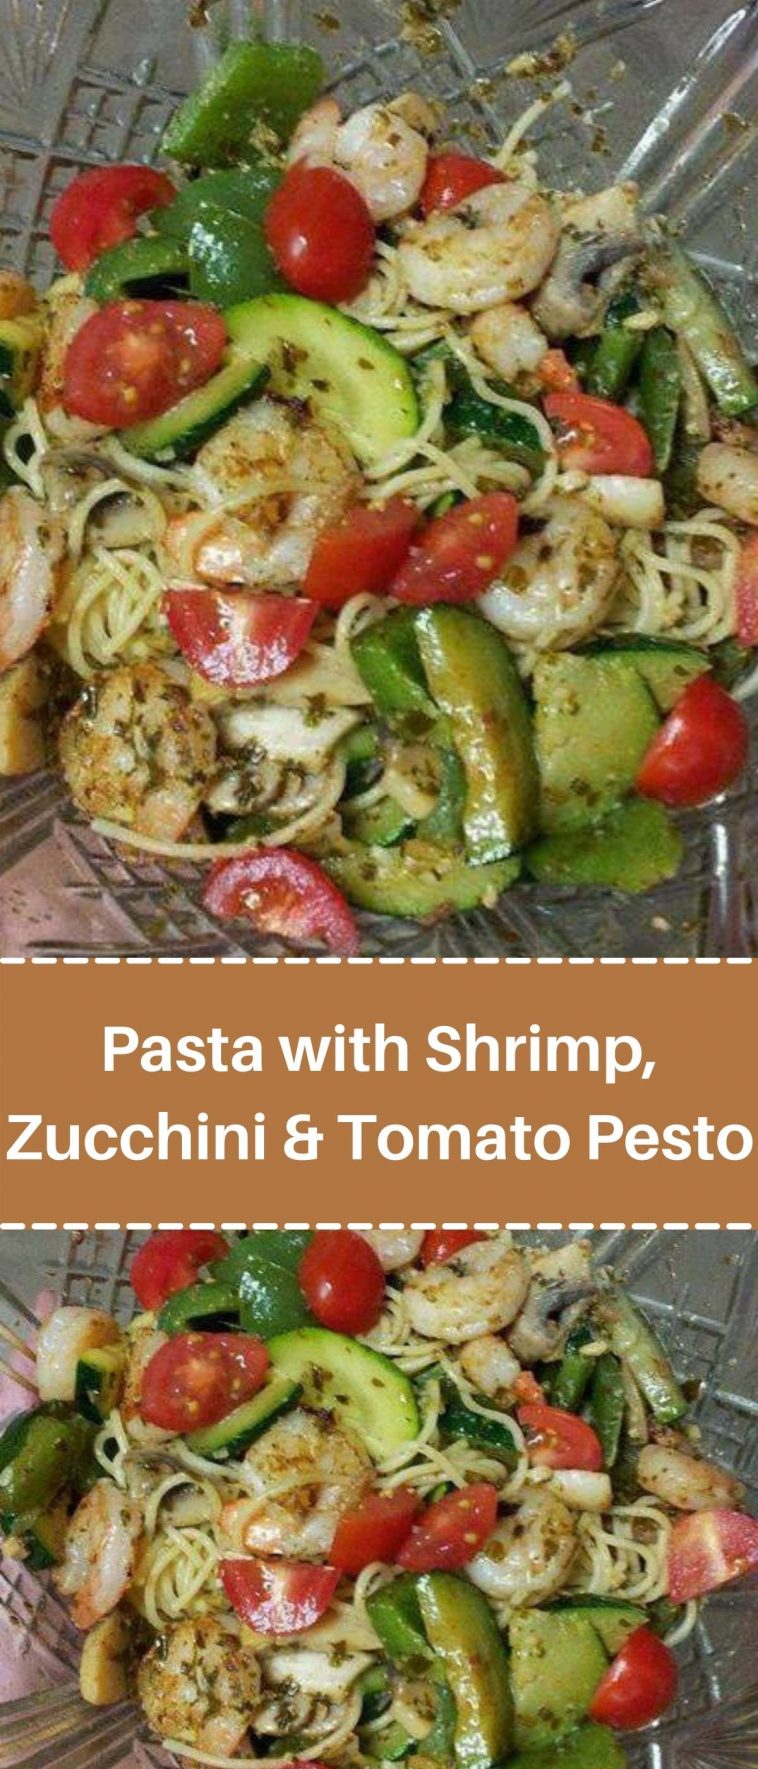 Pasta with Shrimp, Zucchini & Tomato Pesto